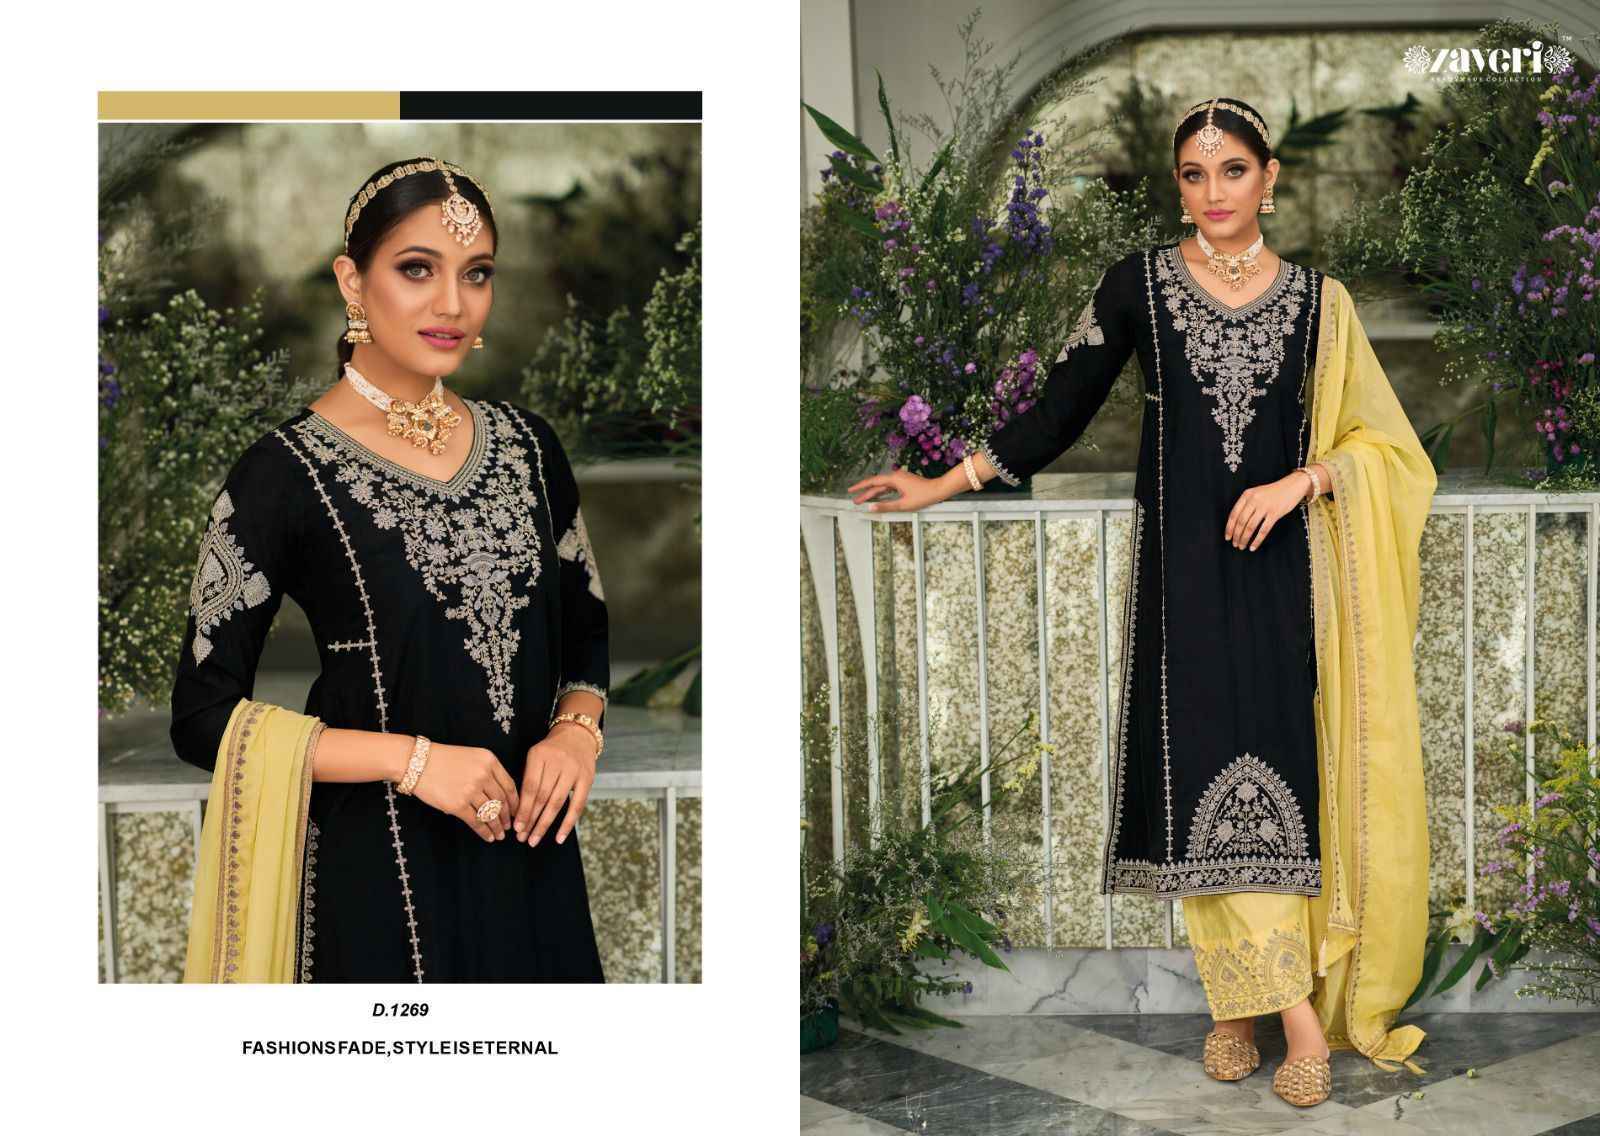 Zaveri Black & White Vol 3 Readymade Silk Dress 2 pcs Catalogue